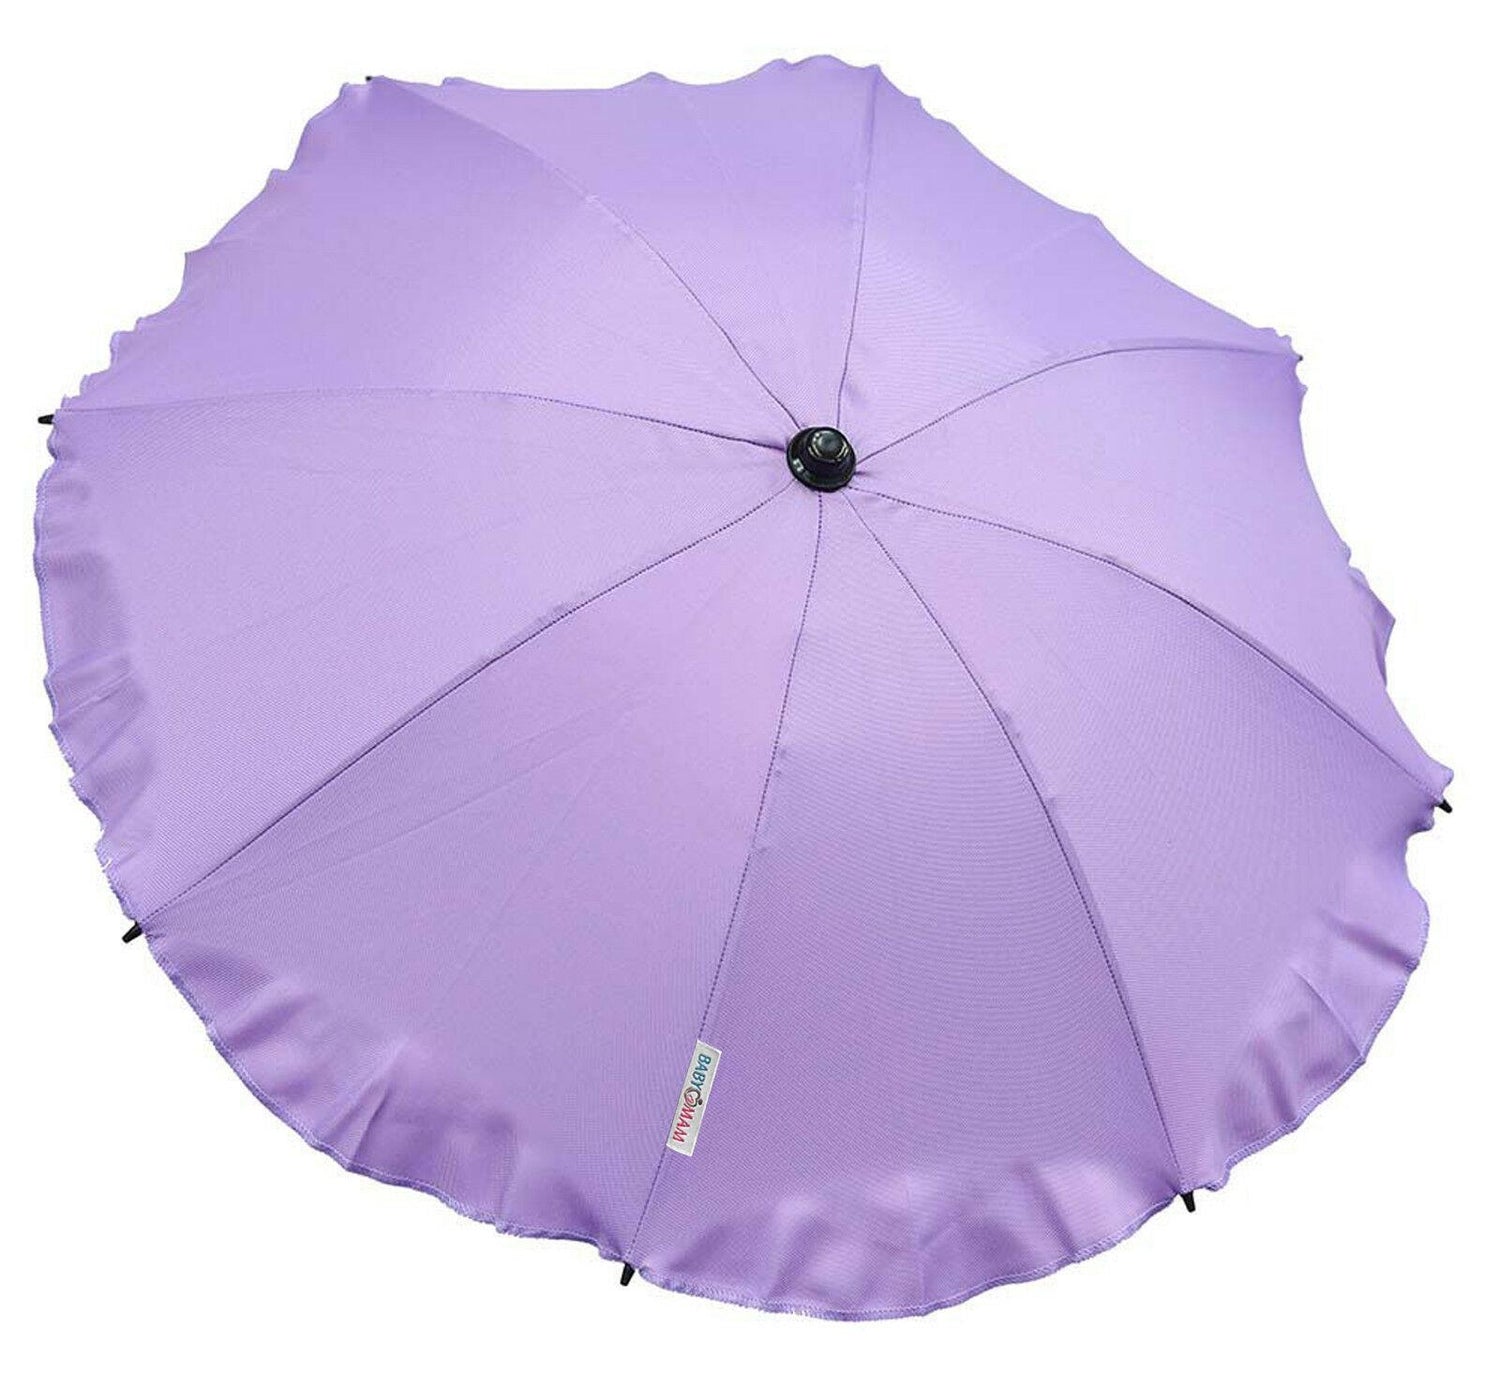 Baby Parasol Universal Sun Umbrella Pram Stroller Canopy Protect From Sun Rain Lavender